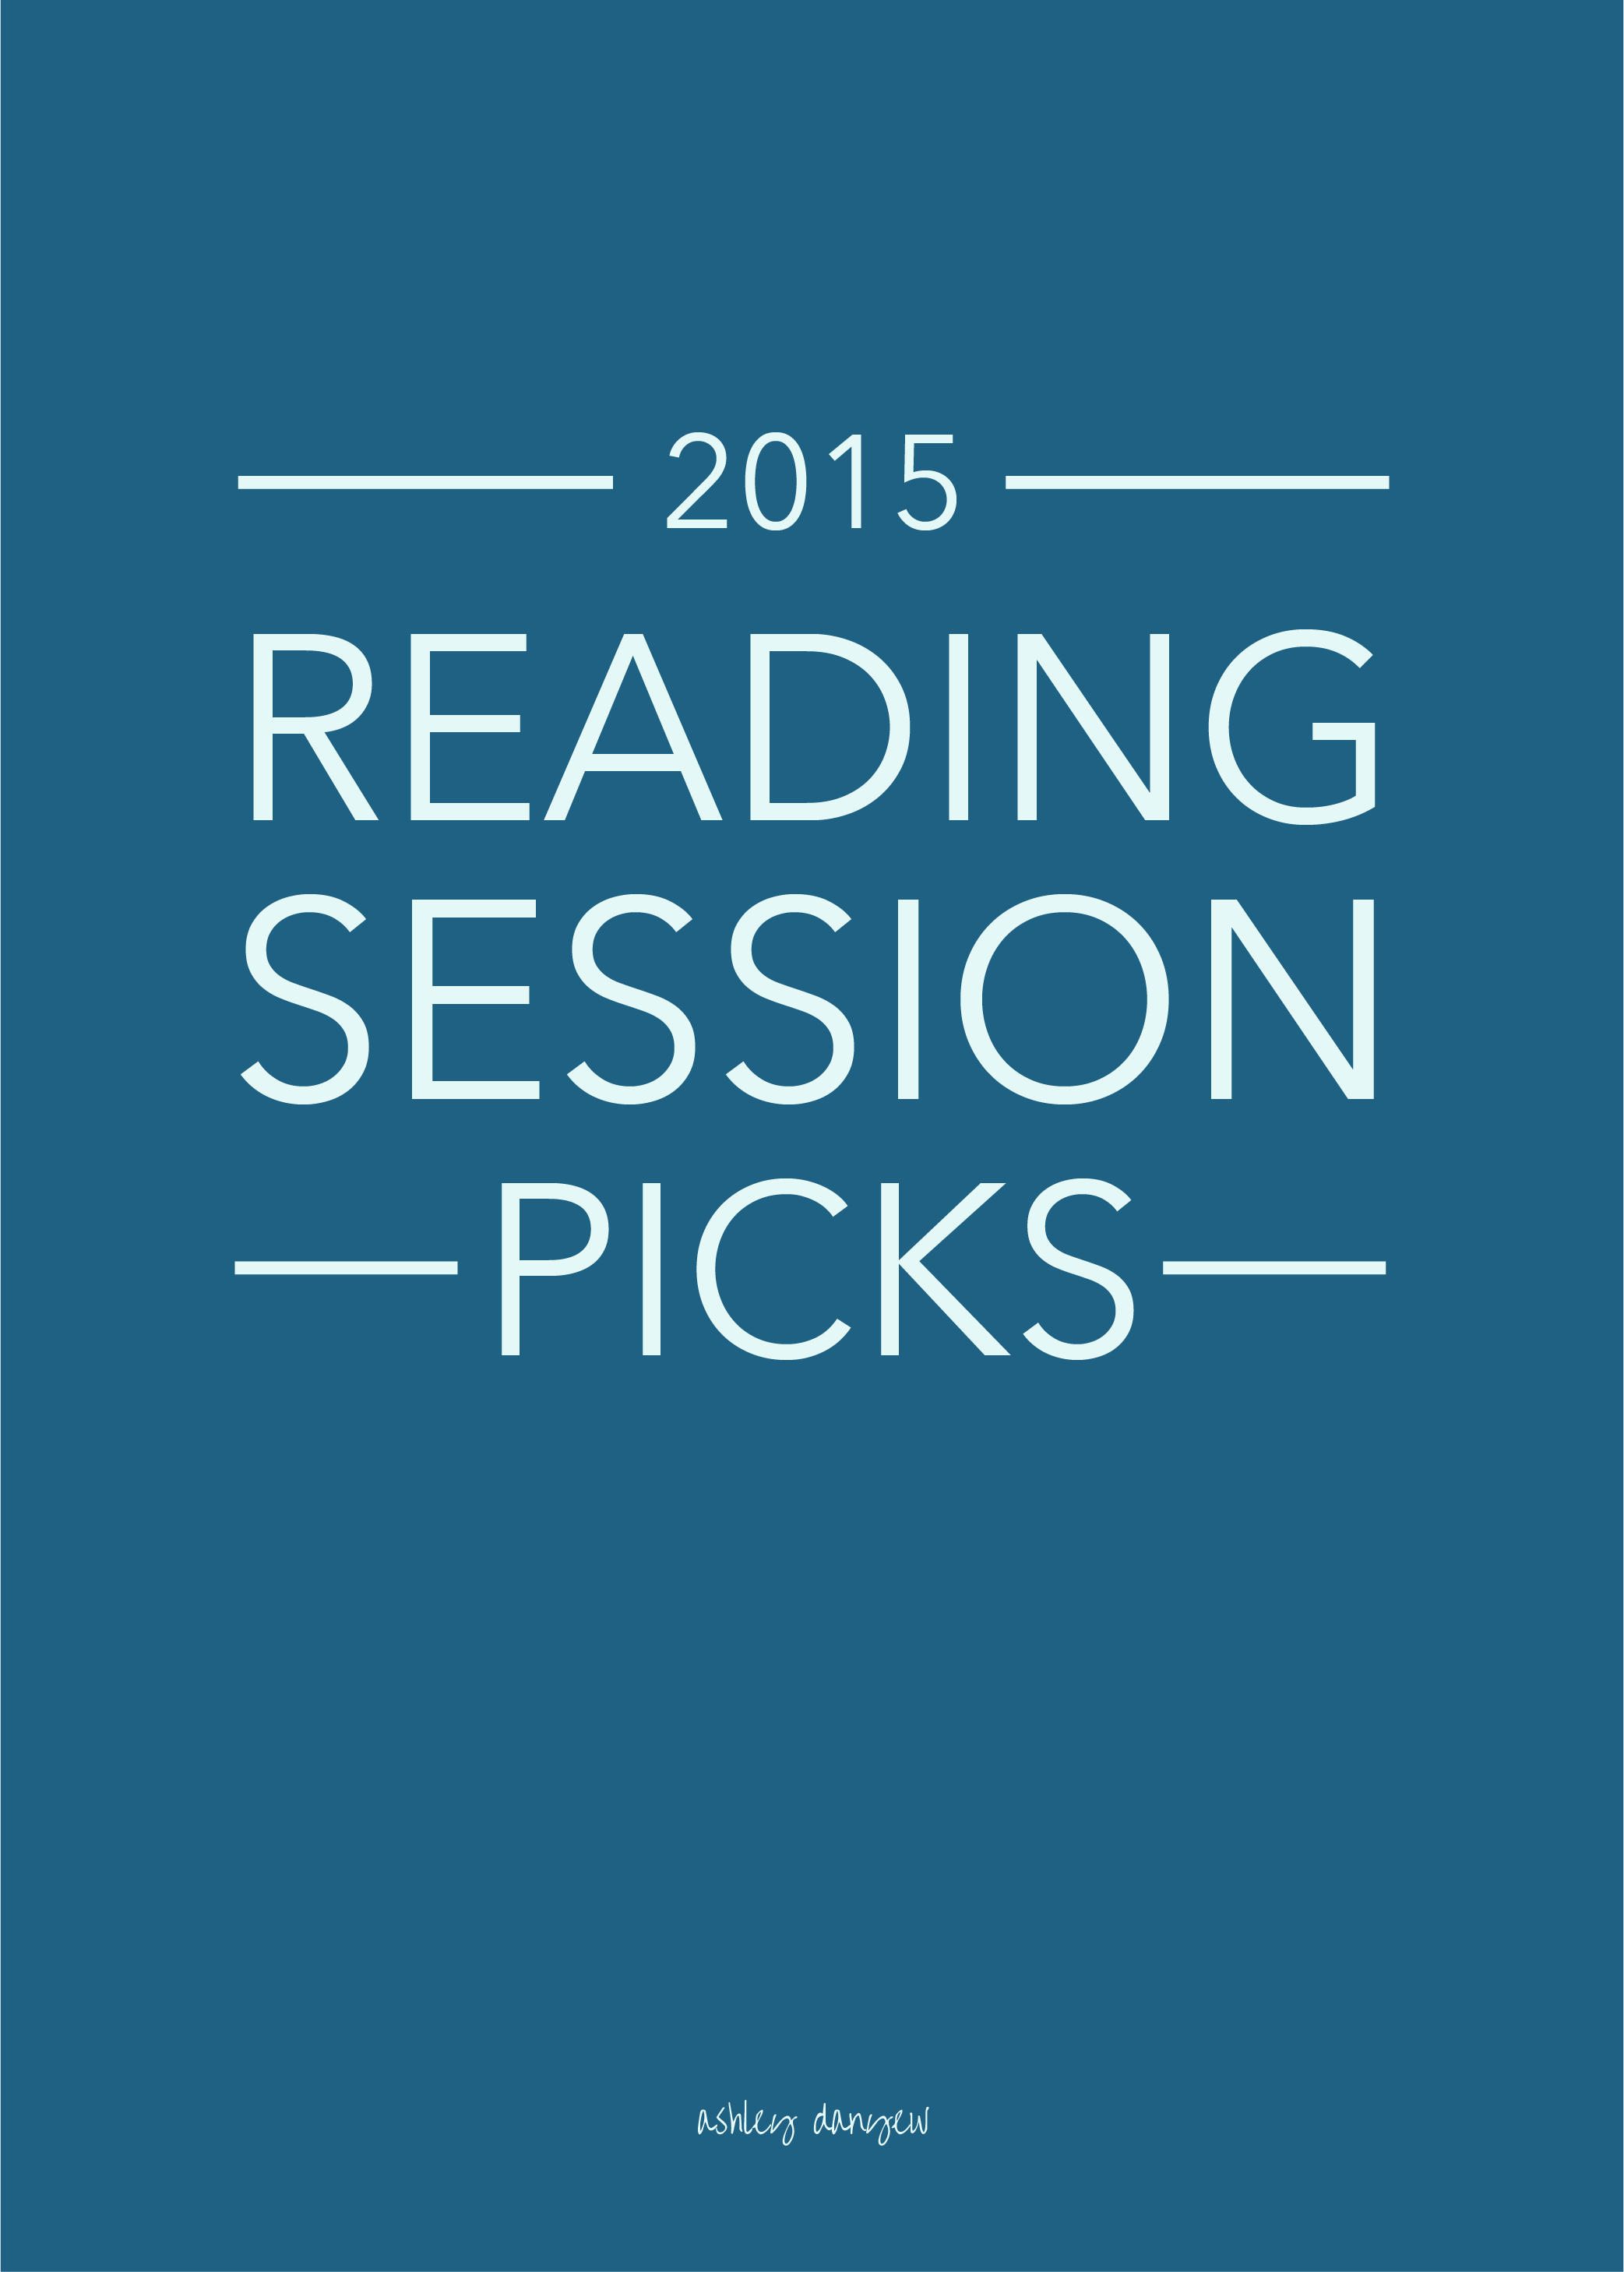 Copy of 2015 Reading Session Picks